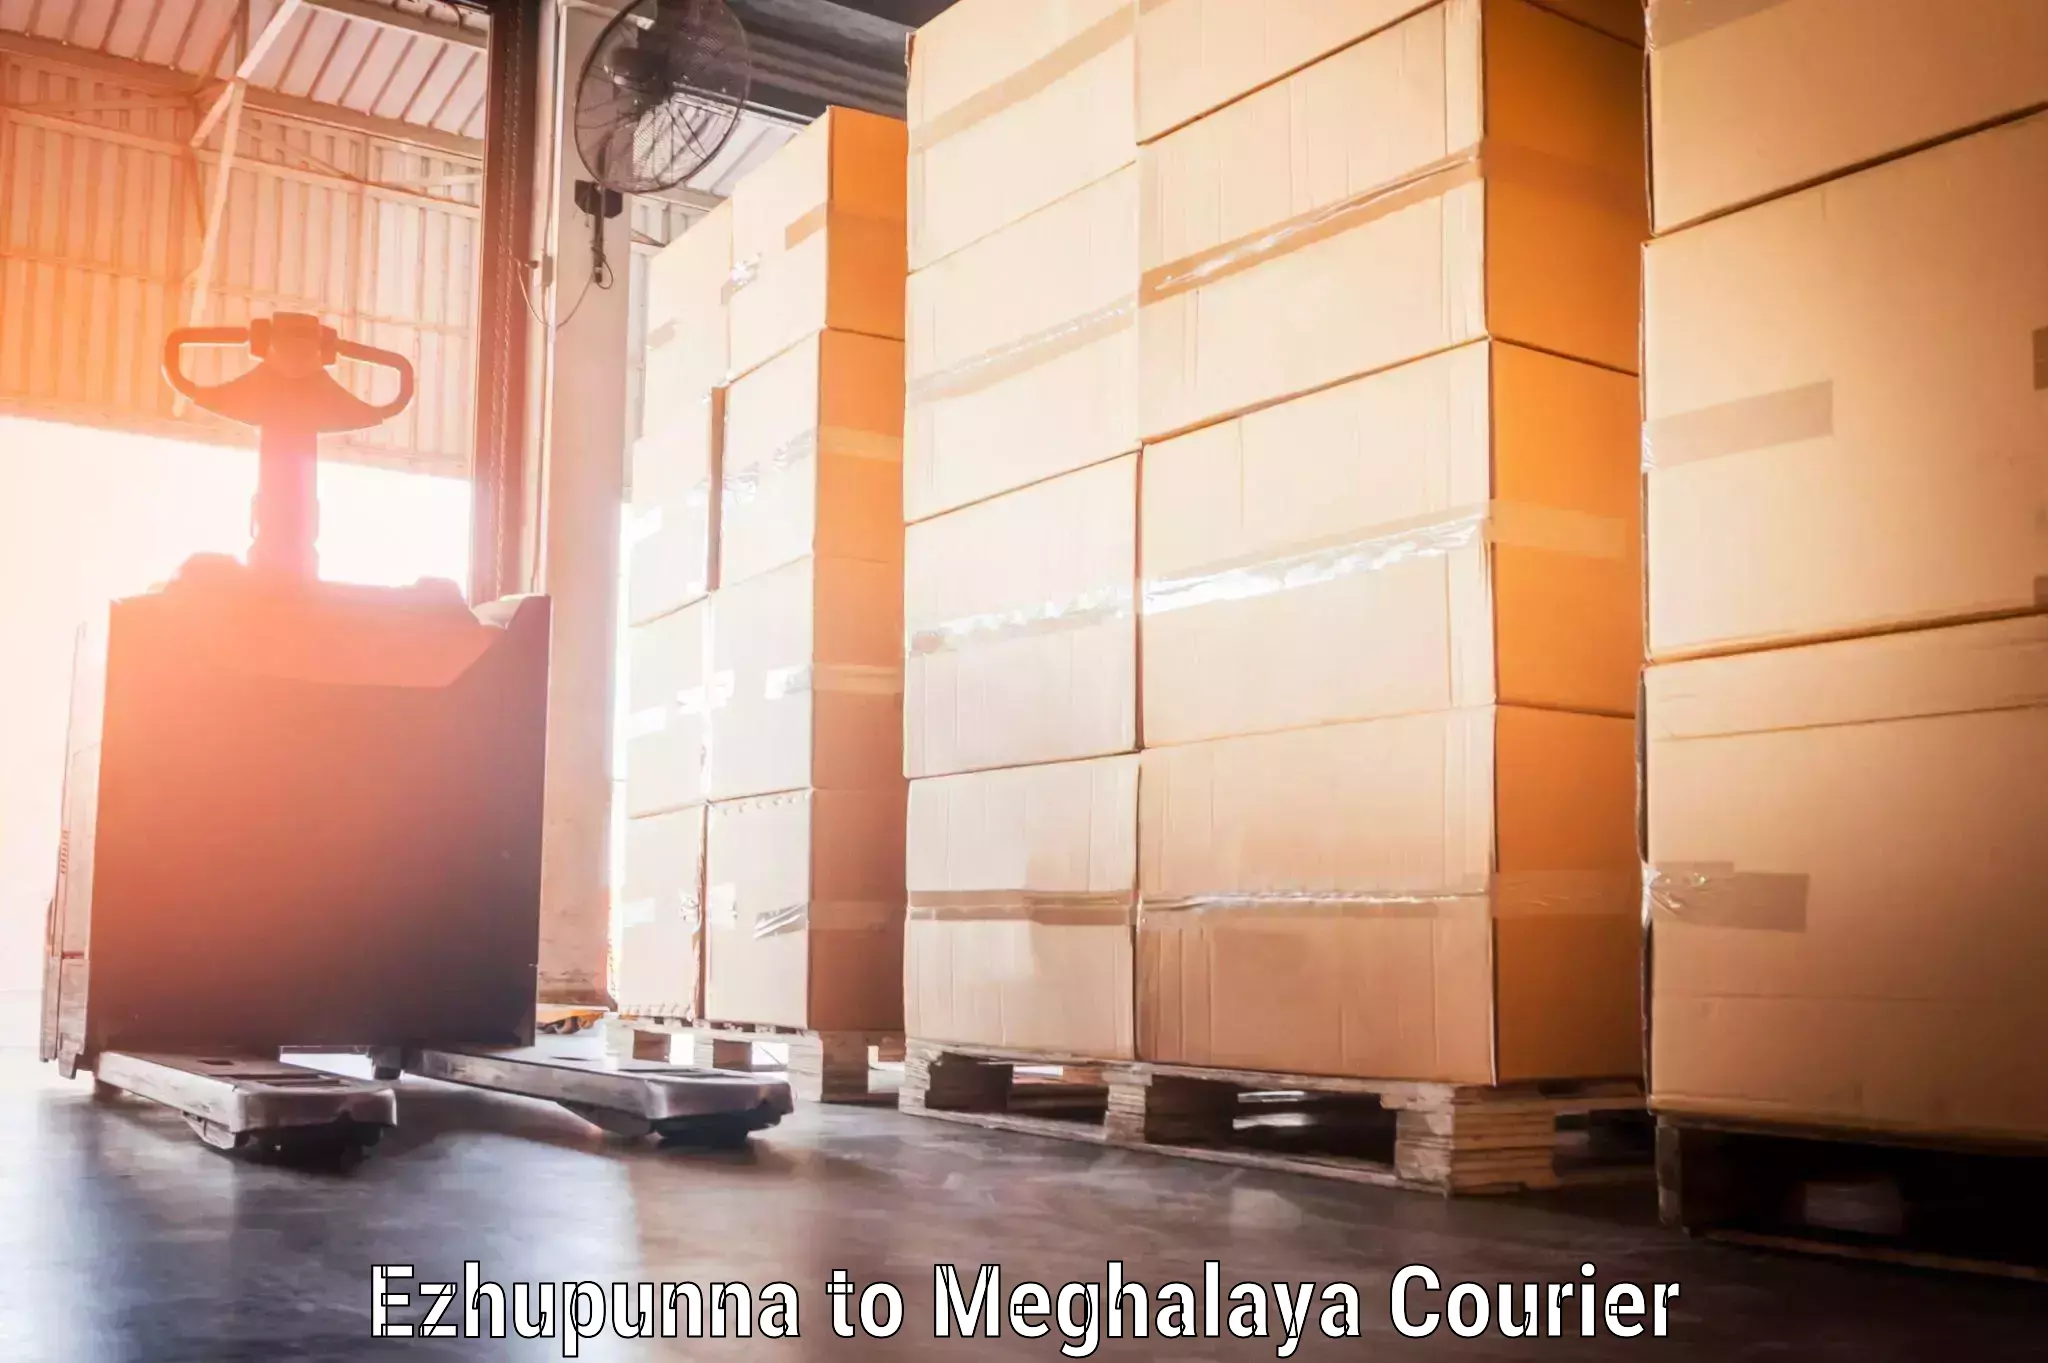 Baggage delivery technology Ezhupunna to Meghalaya